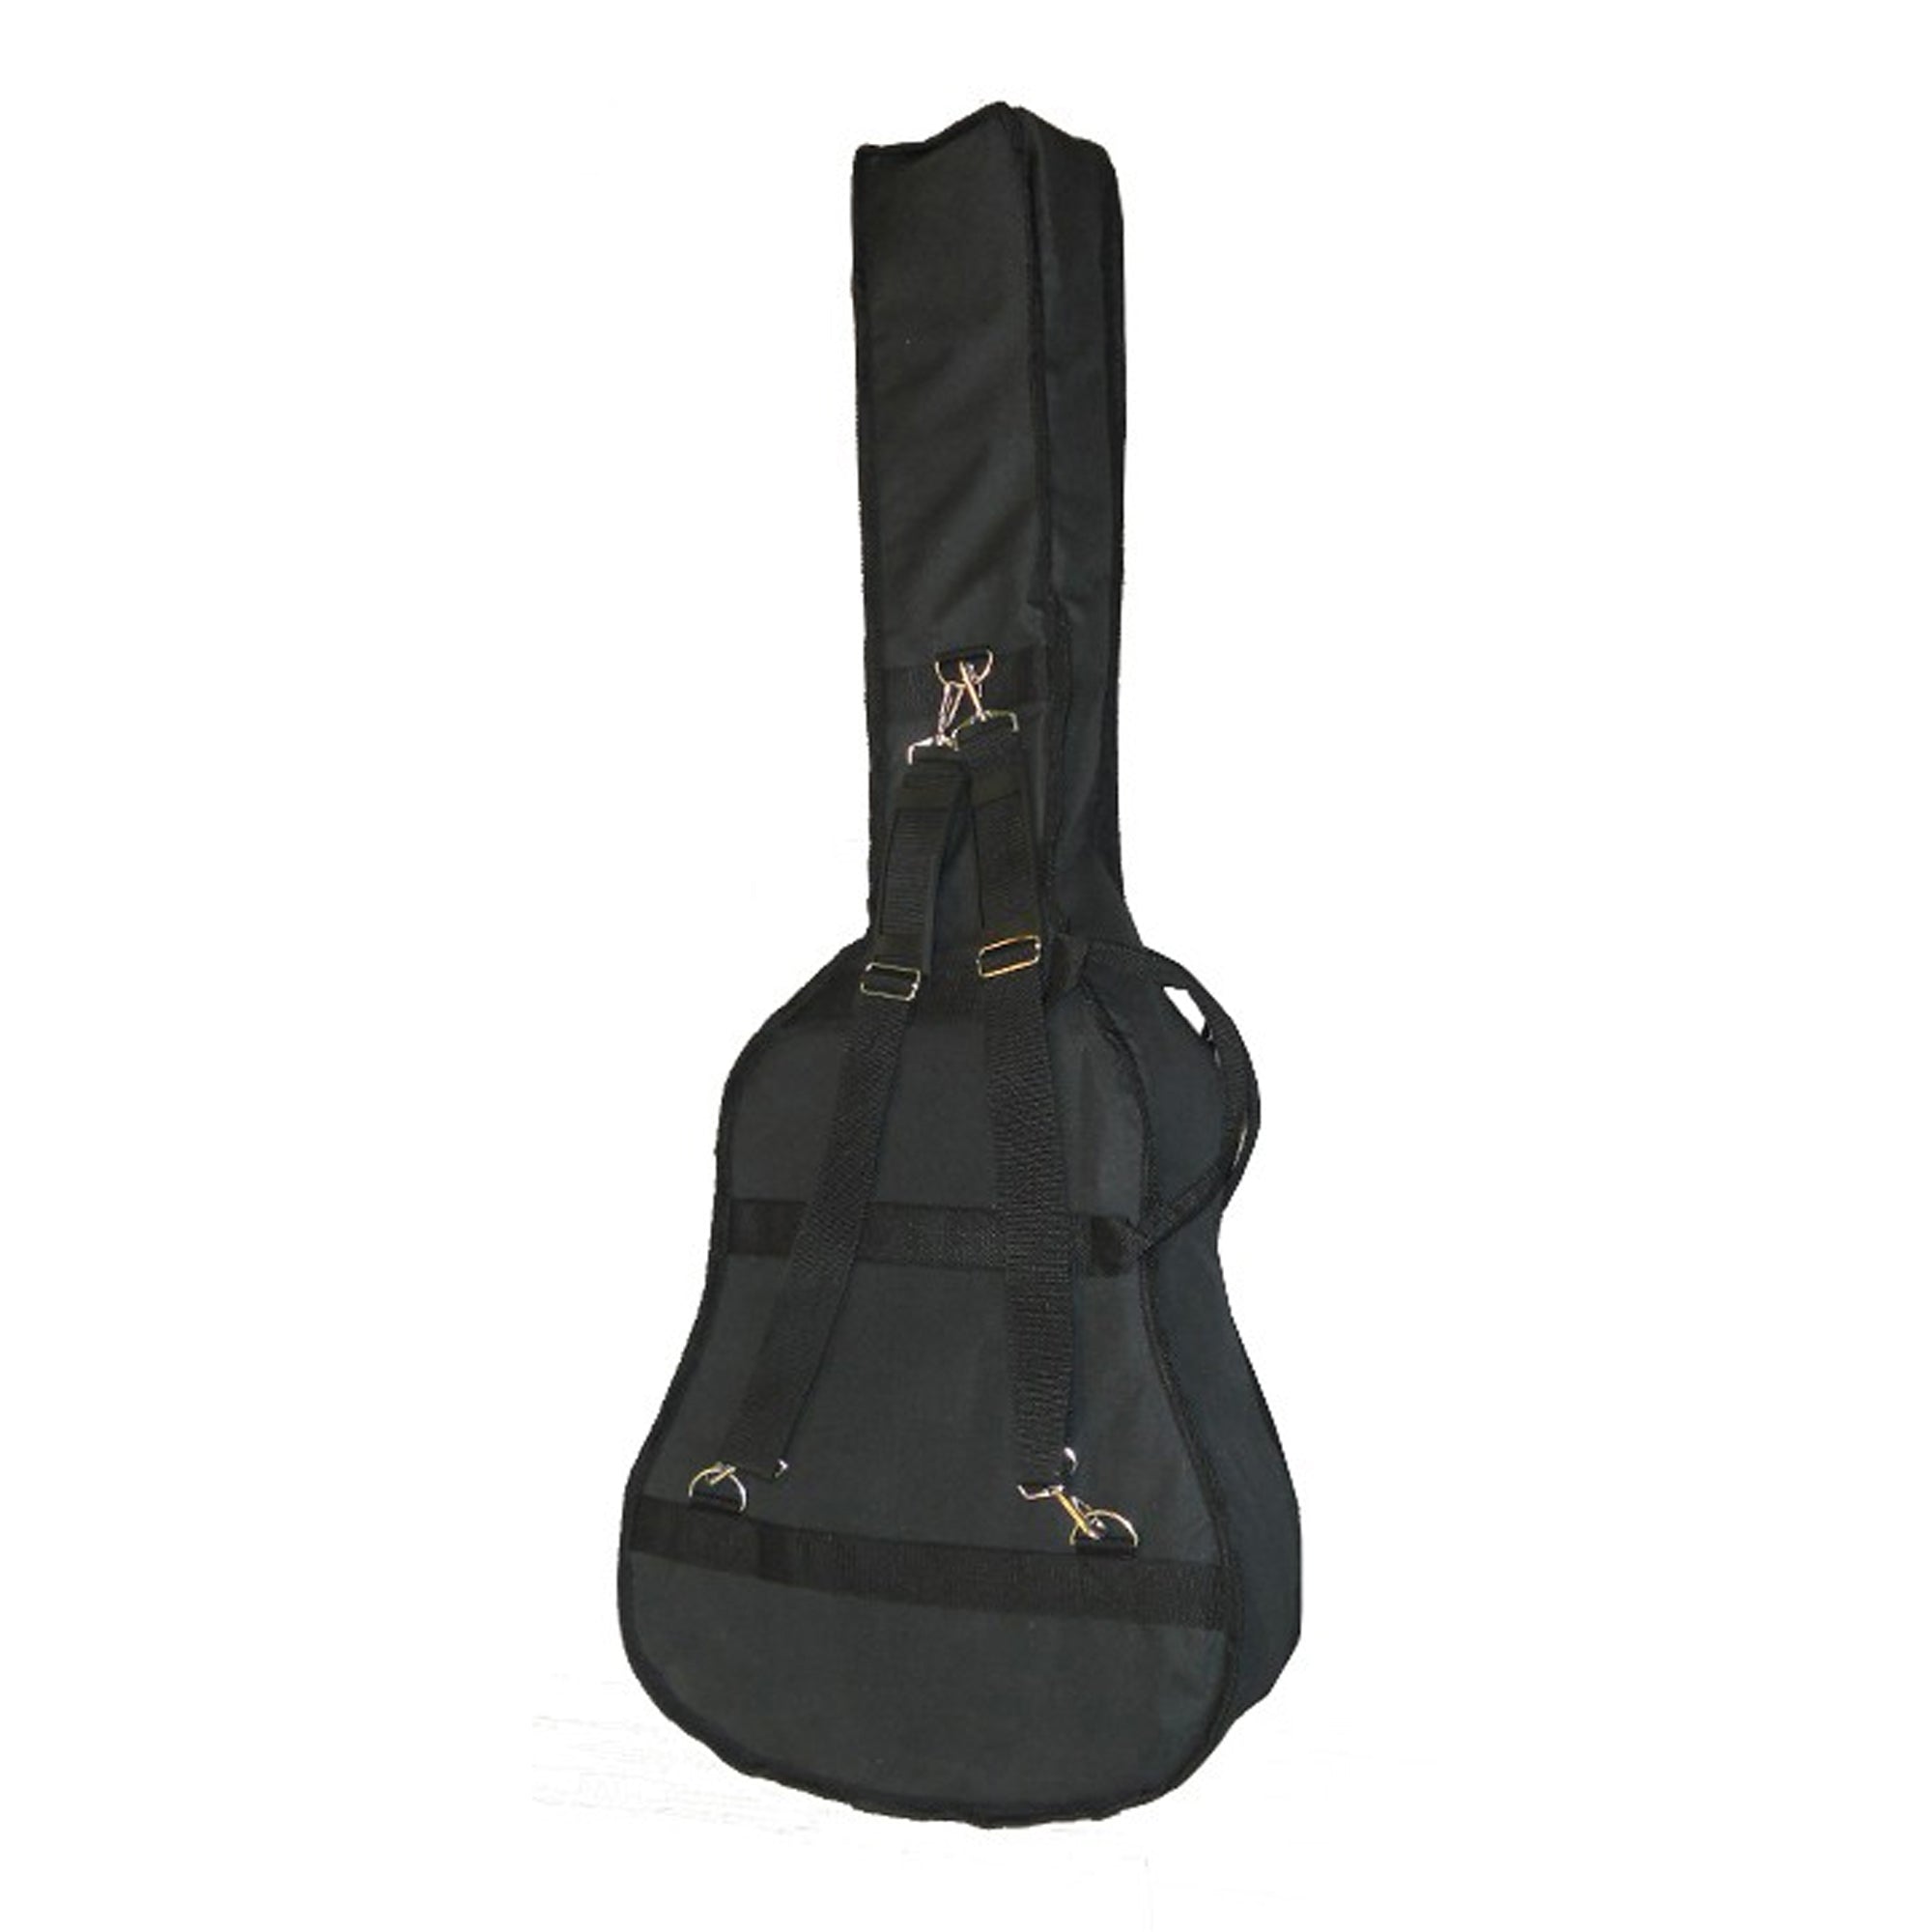 Epiphone Black 940-XAGIG Acoustic Guitar Bag